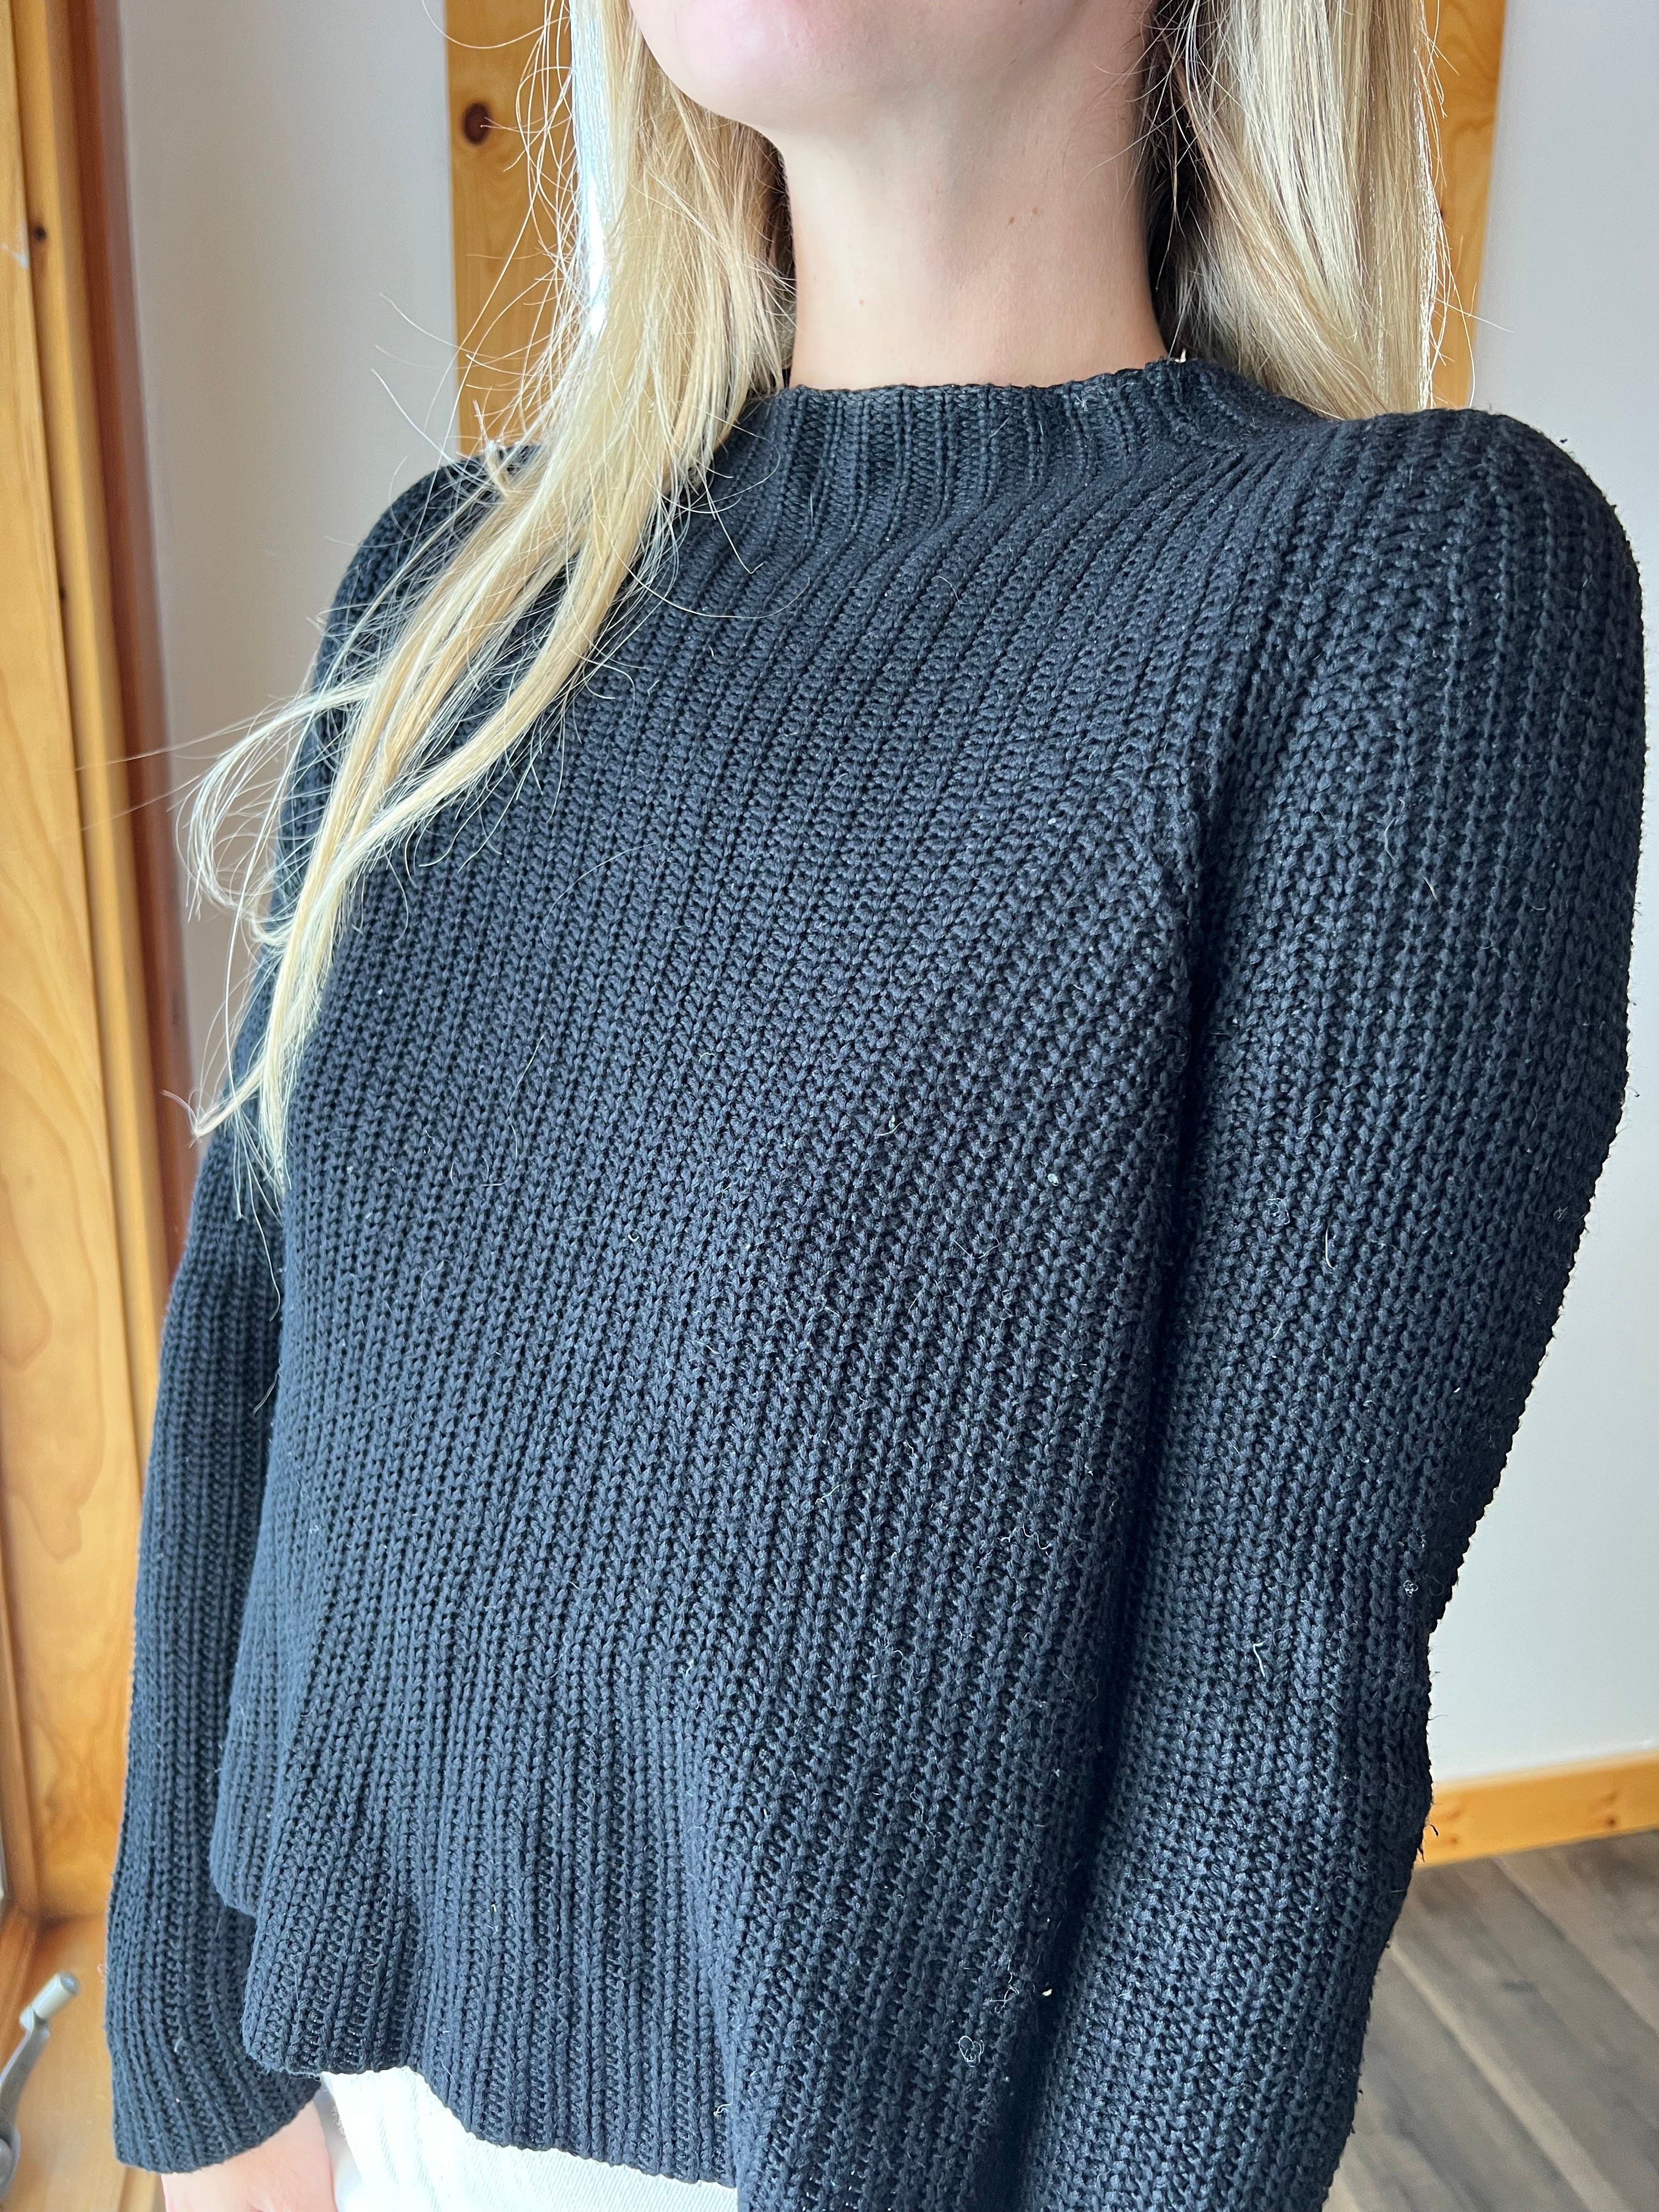 38: American Apparel Sweater